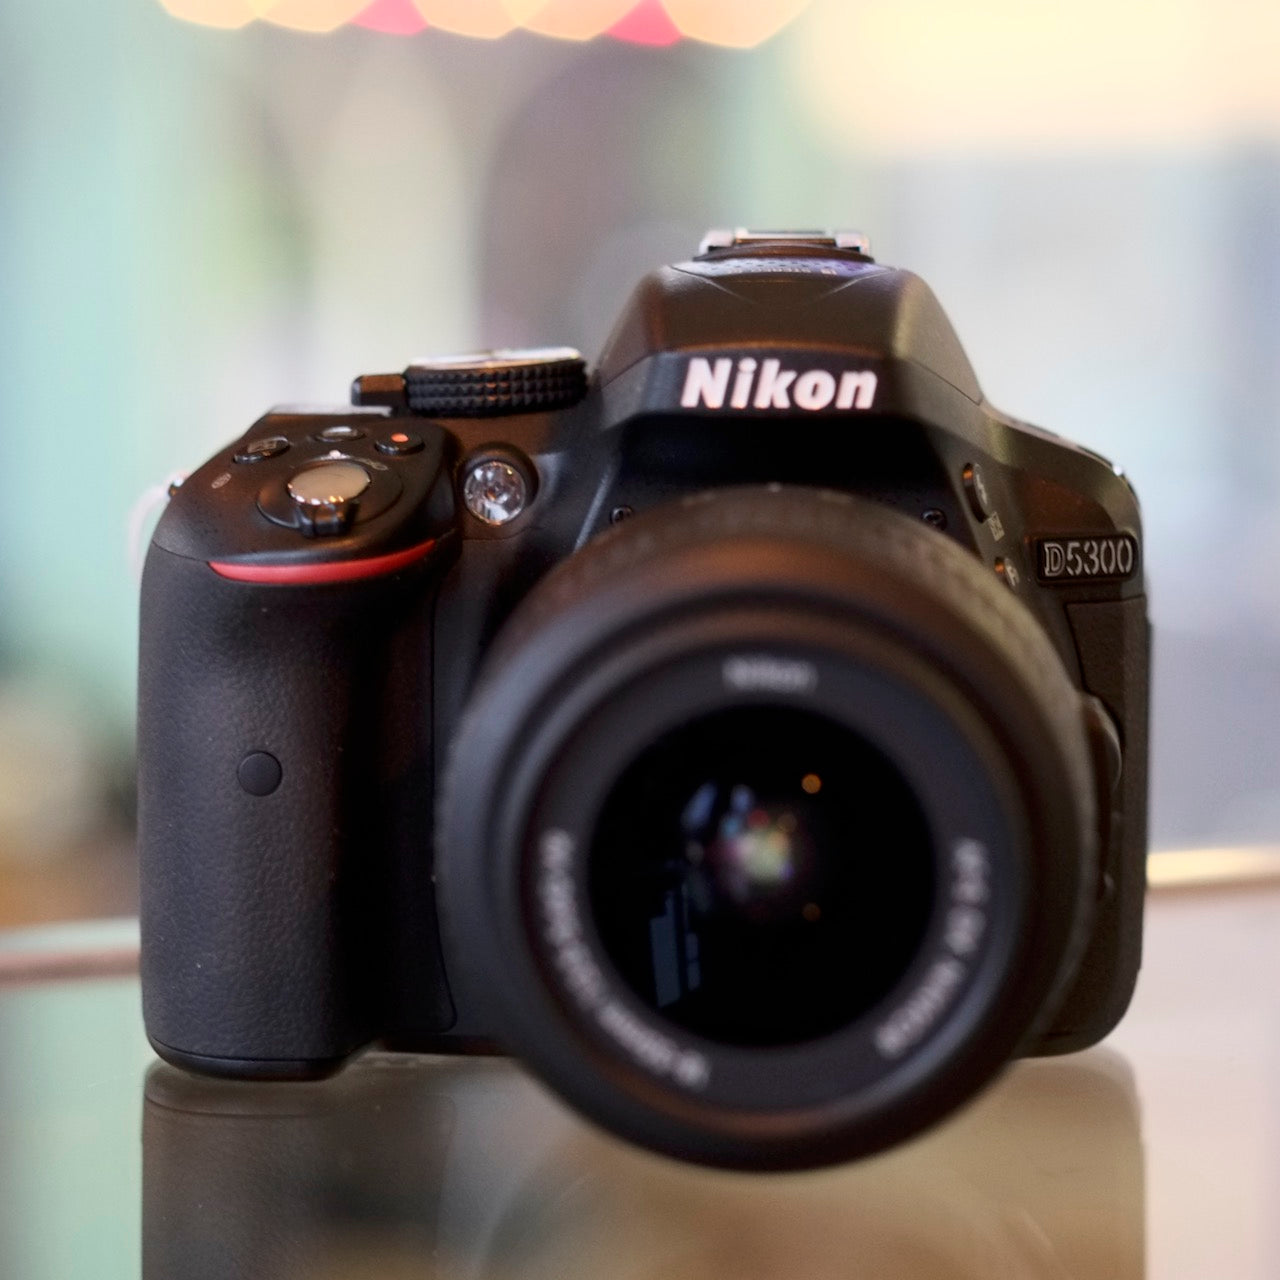 Nikon D5300 with Nikon 18-55mm f3.5-5.6G VR